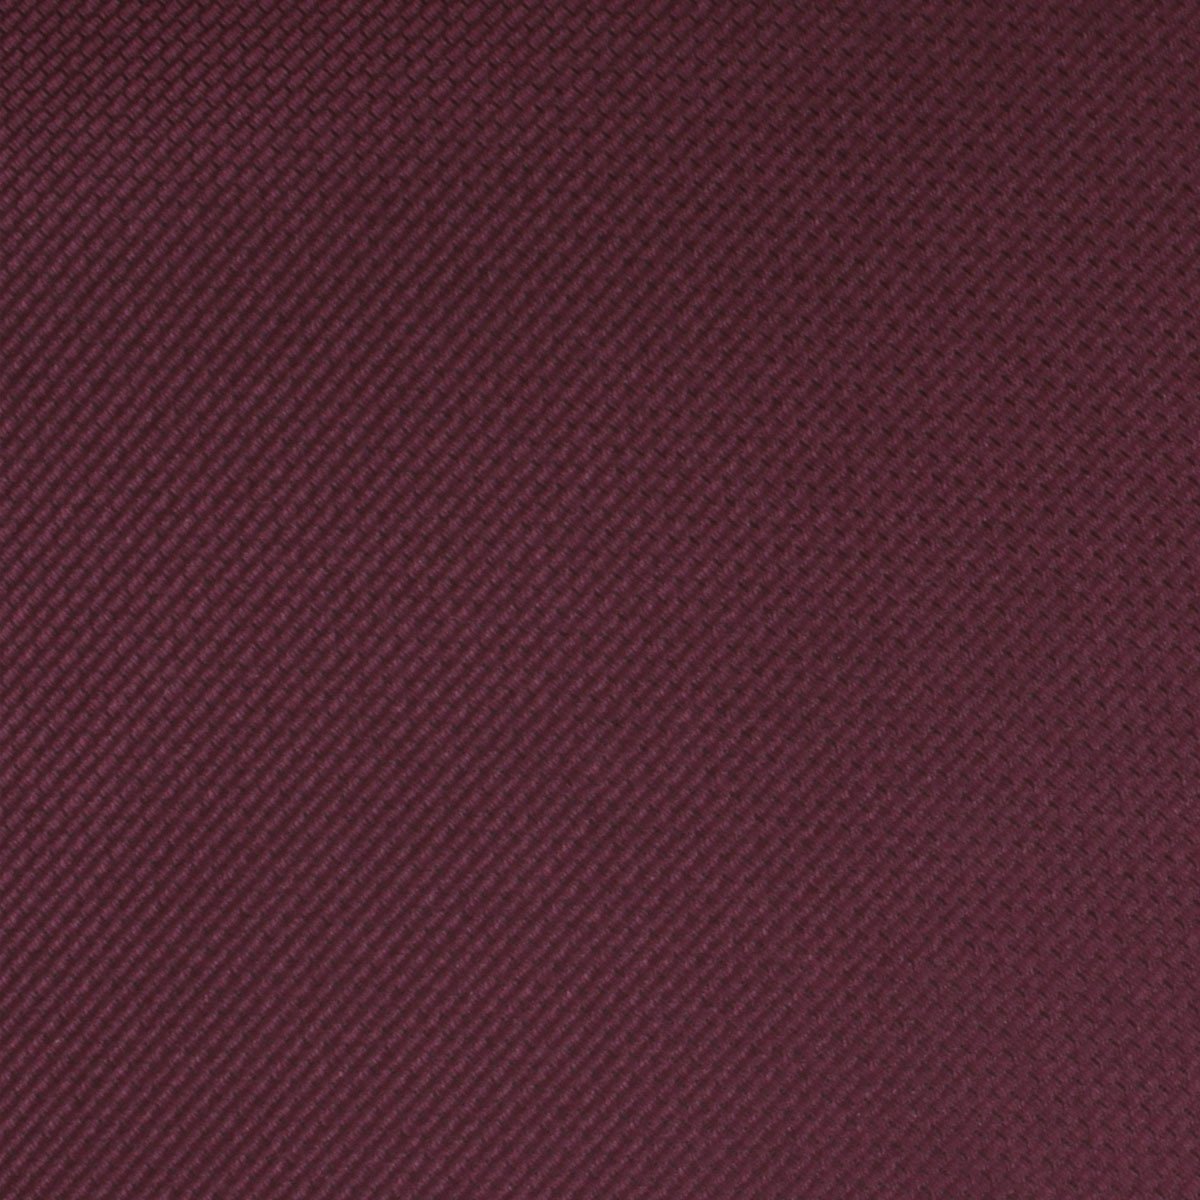 Garnet Wine Burgundy Weave Pocket Square Fabric